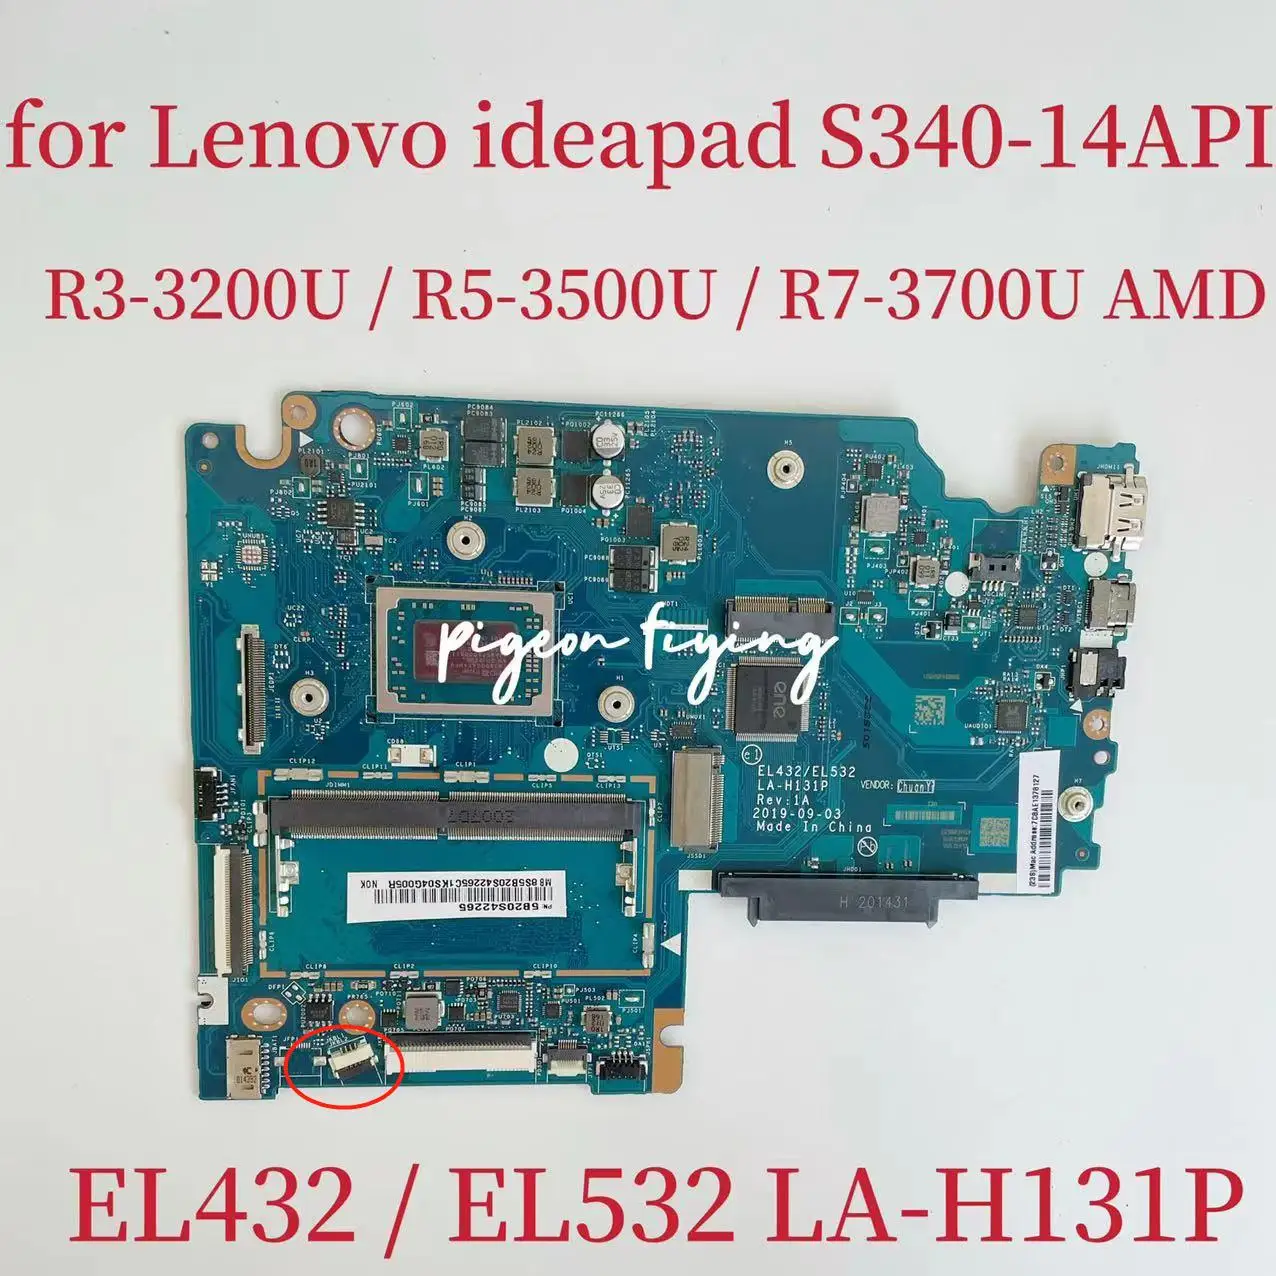 

LA-H131P Mainboard for Lenovo Ideapad S340-14API Laptop Motherboard CPU: R3-3200U / R5-3500U / R7-3700U RAM:4G DDR4 100% Test OK